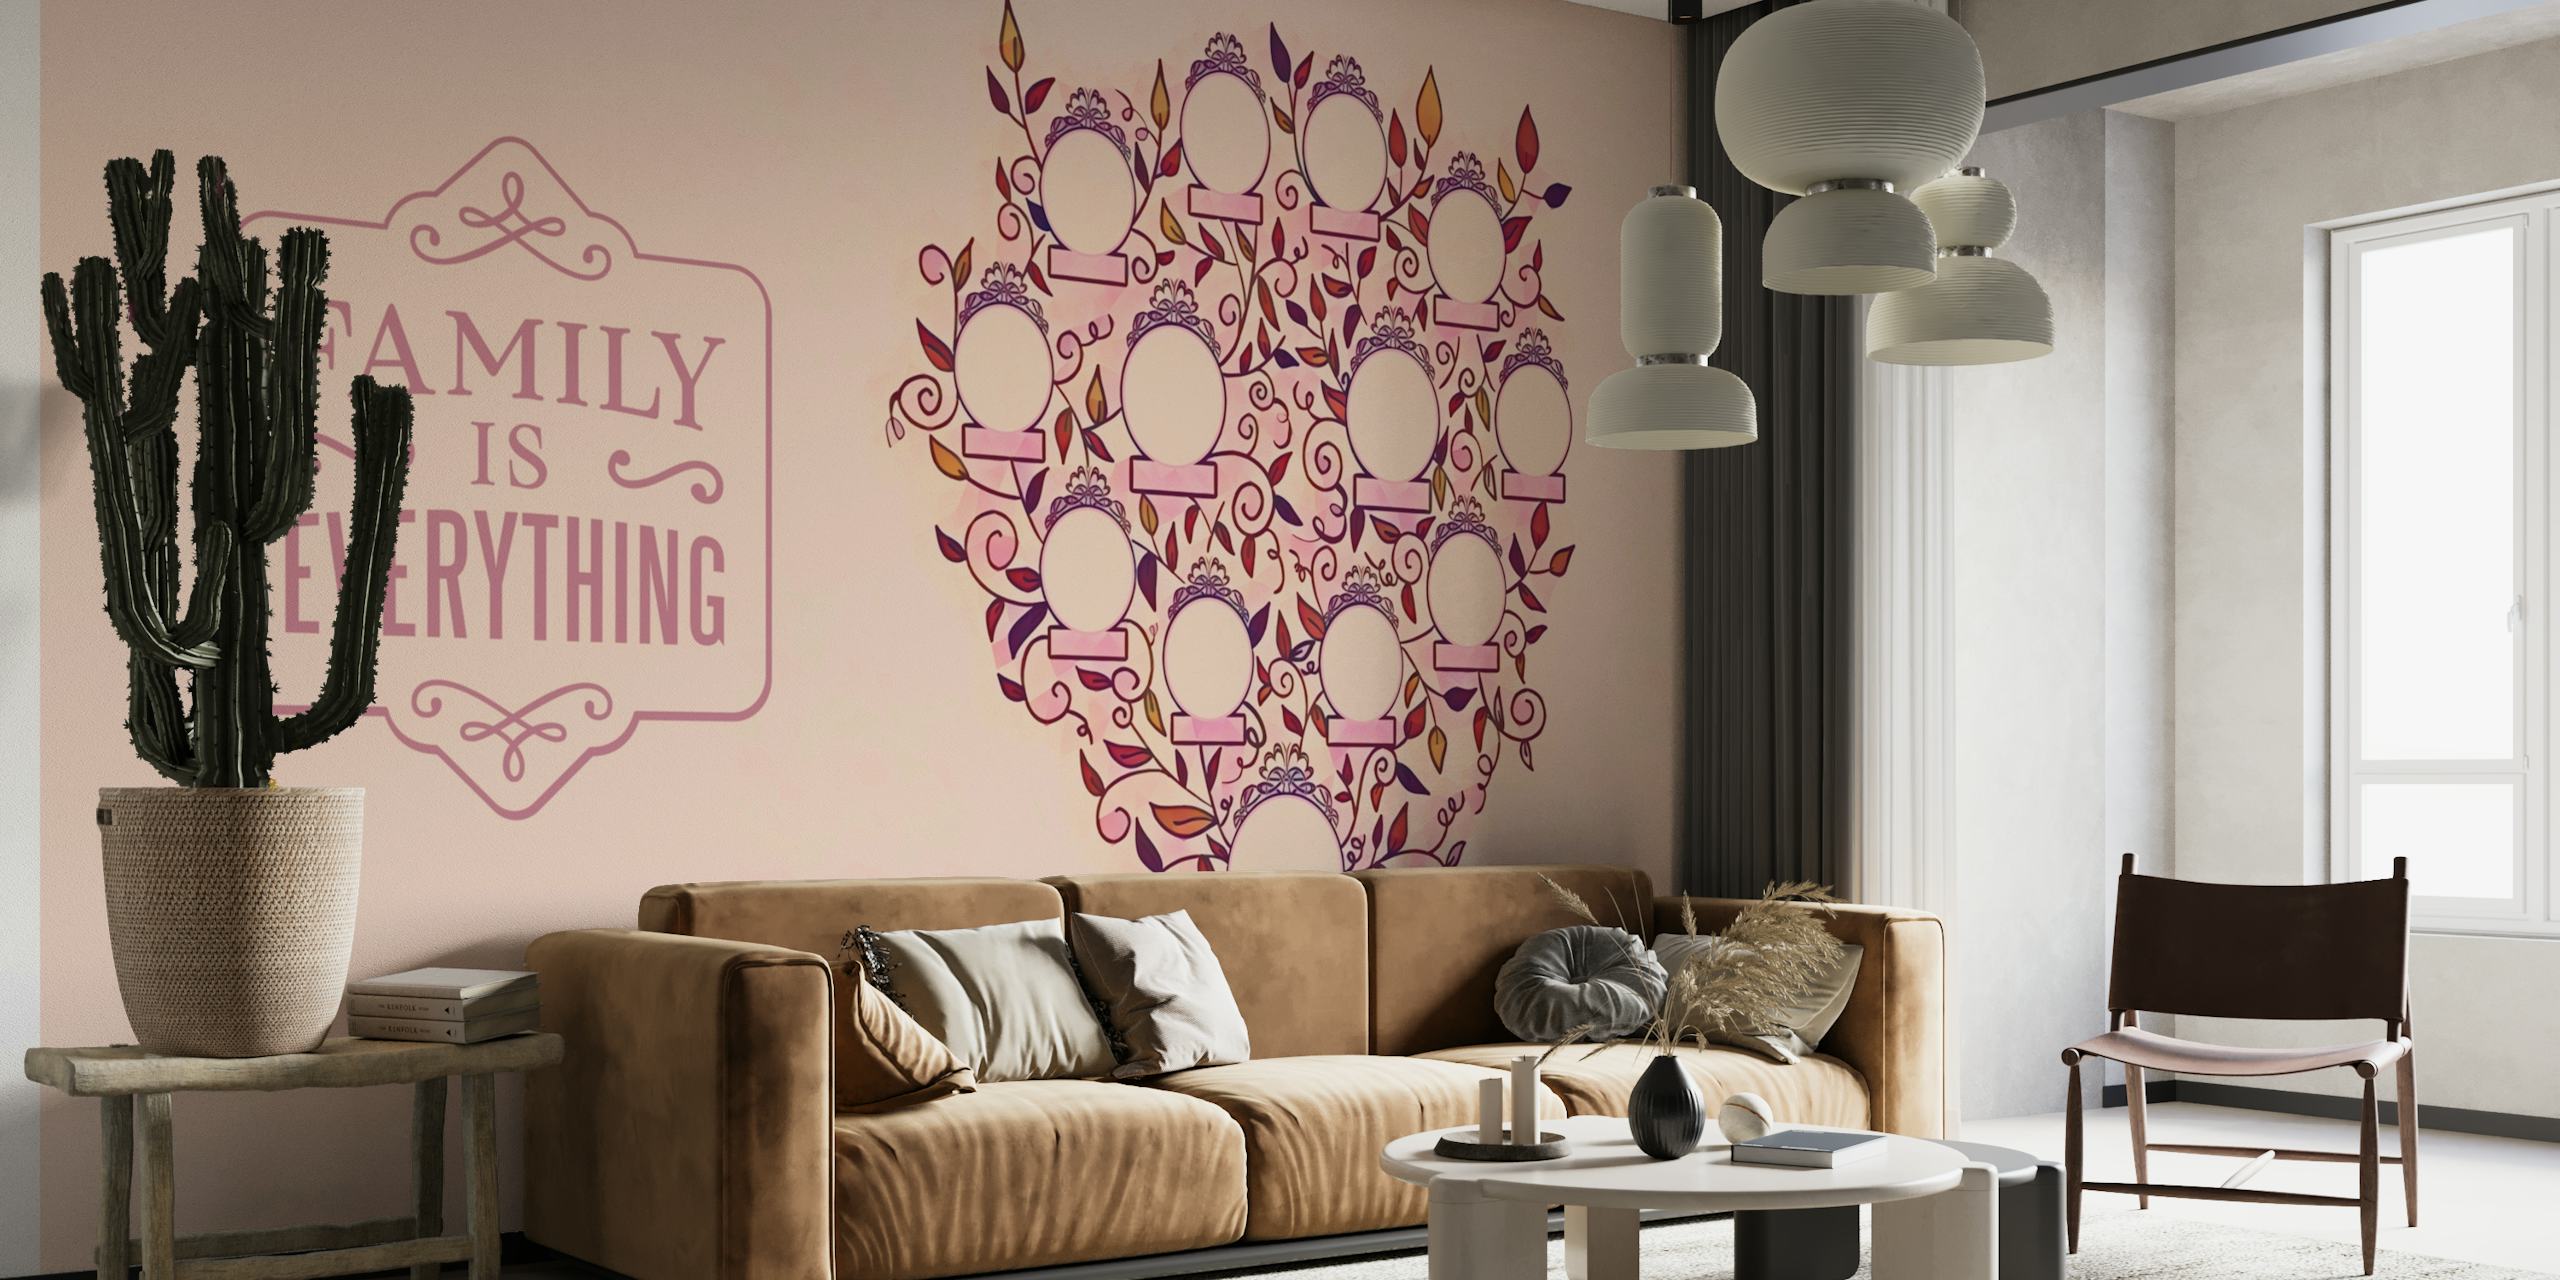 Family Tree wallpaper